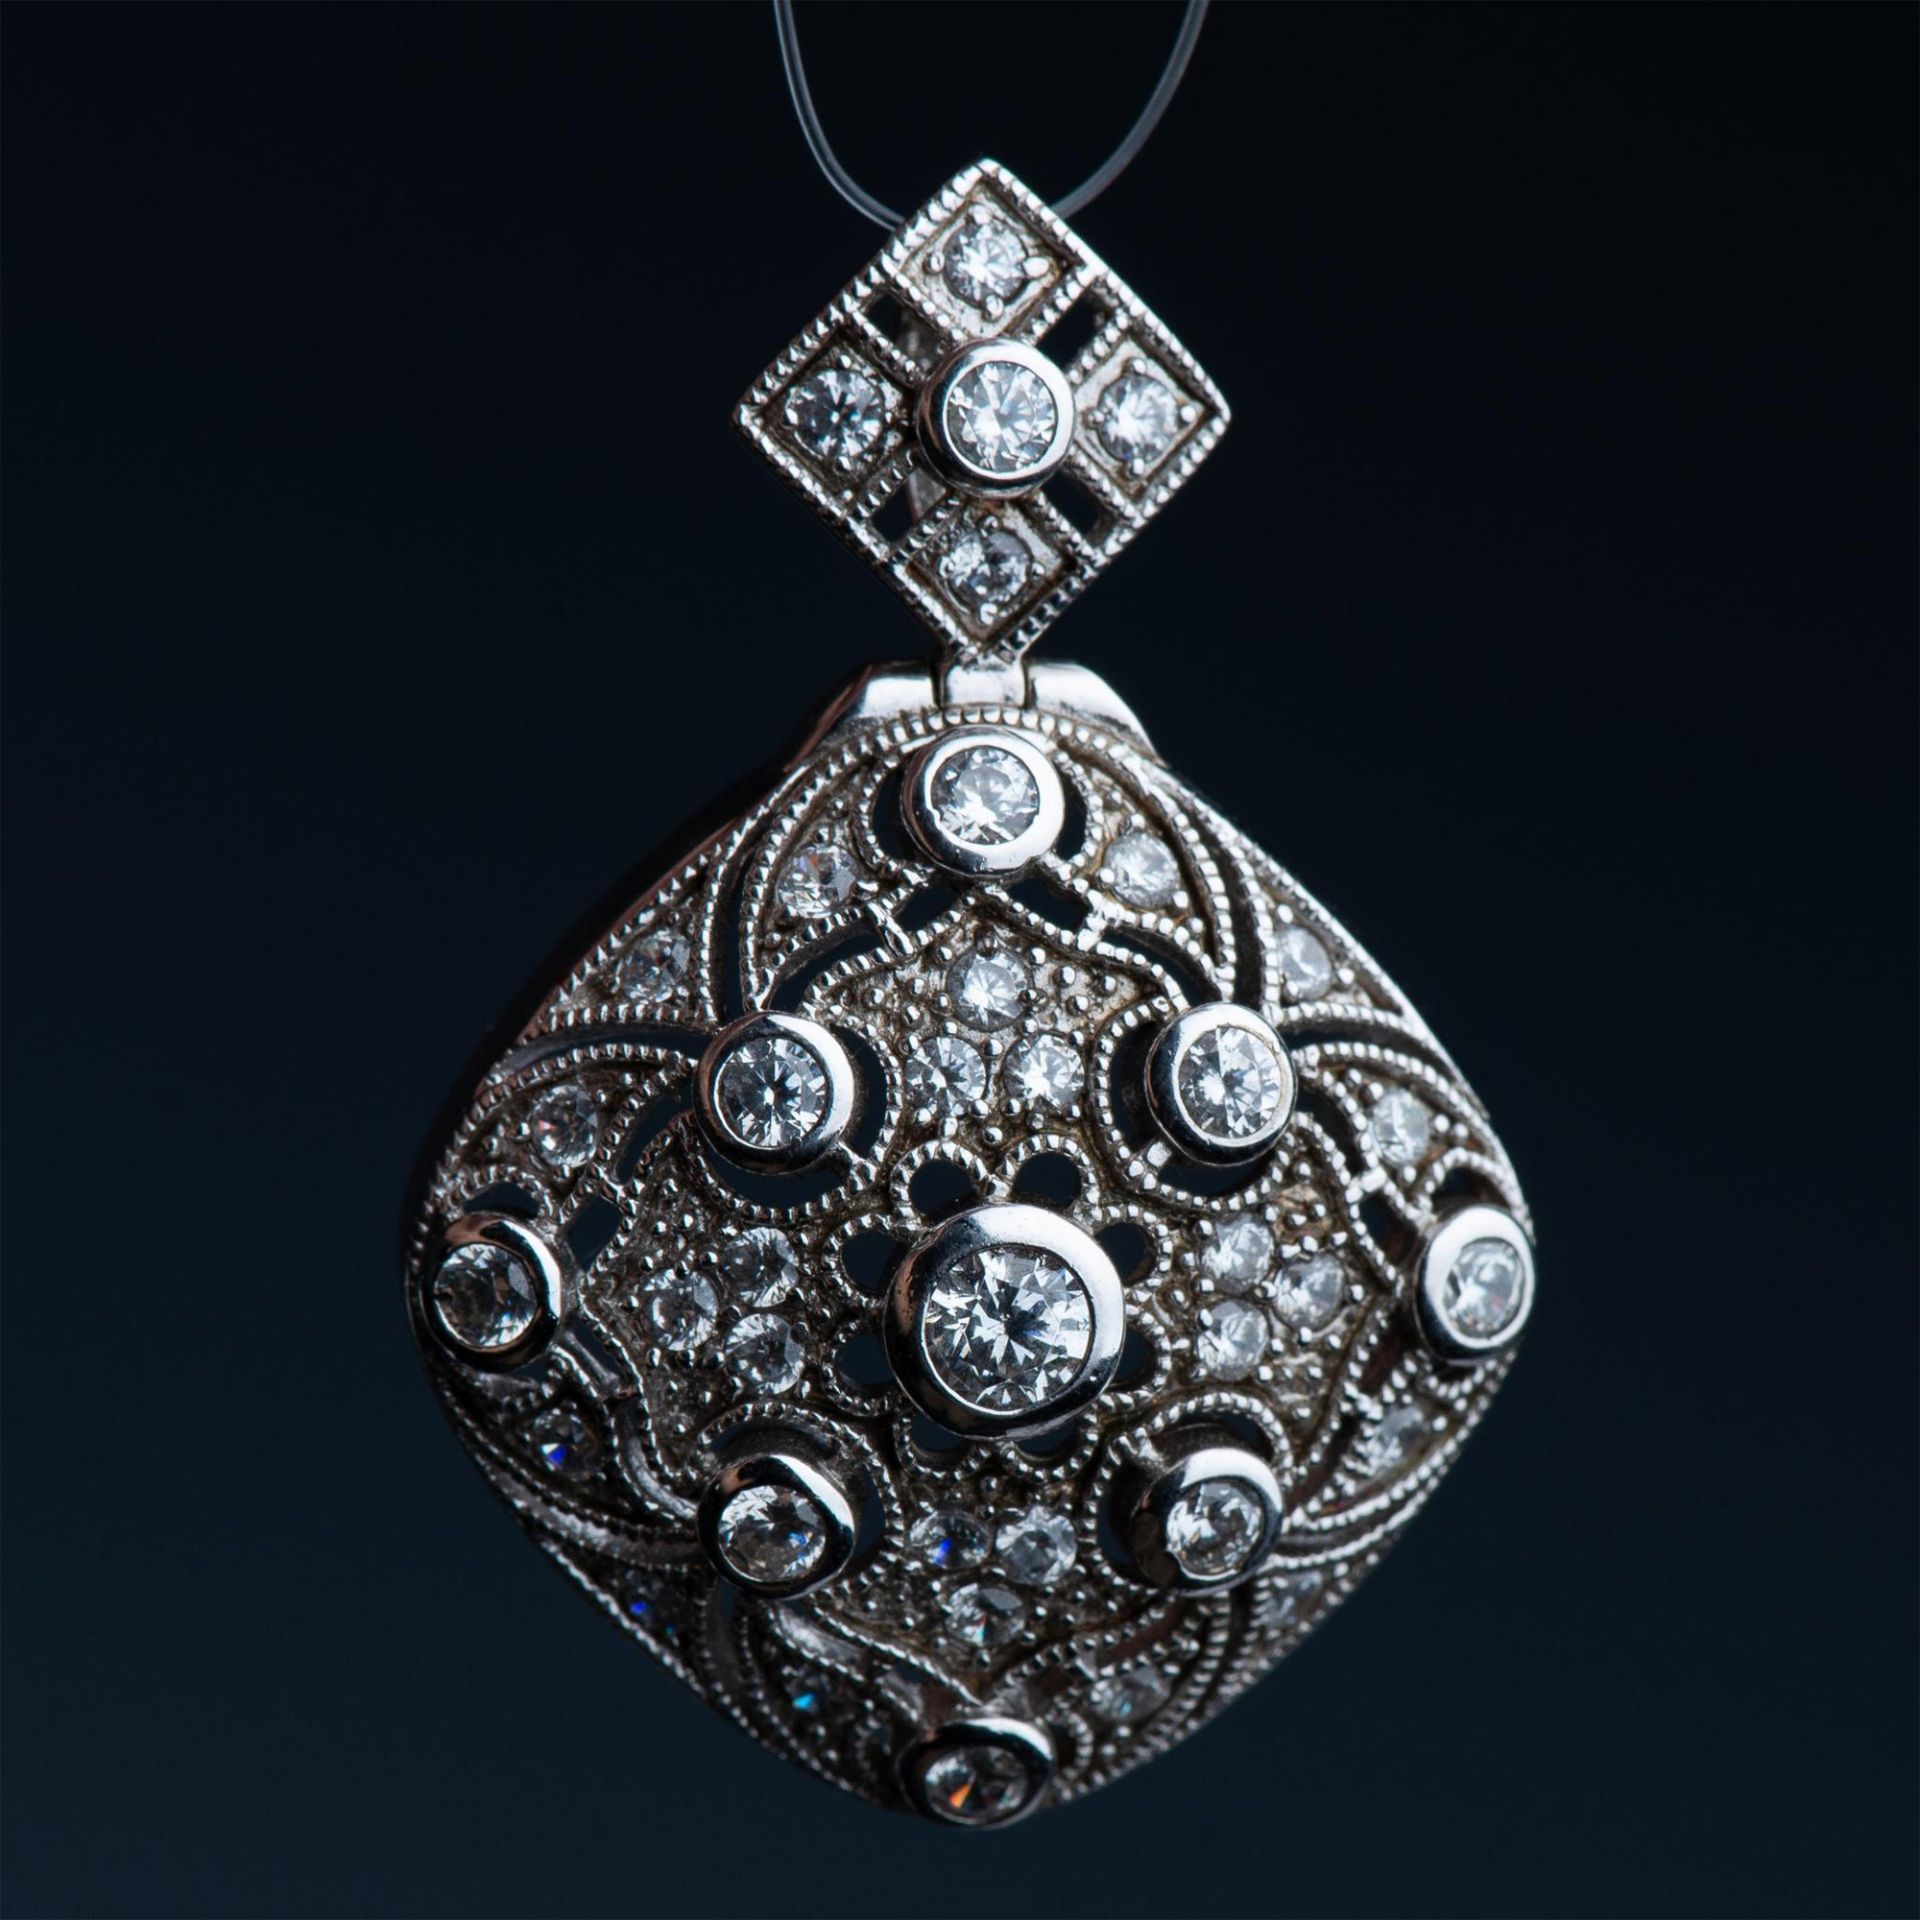 Gorgeous Ornate Sterling Silver Filigree & CZ Pendant